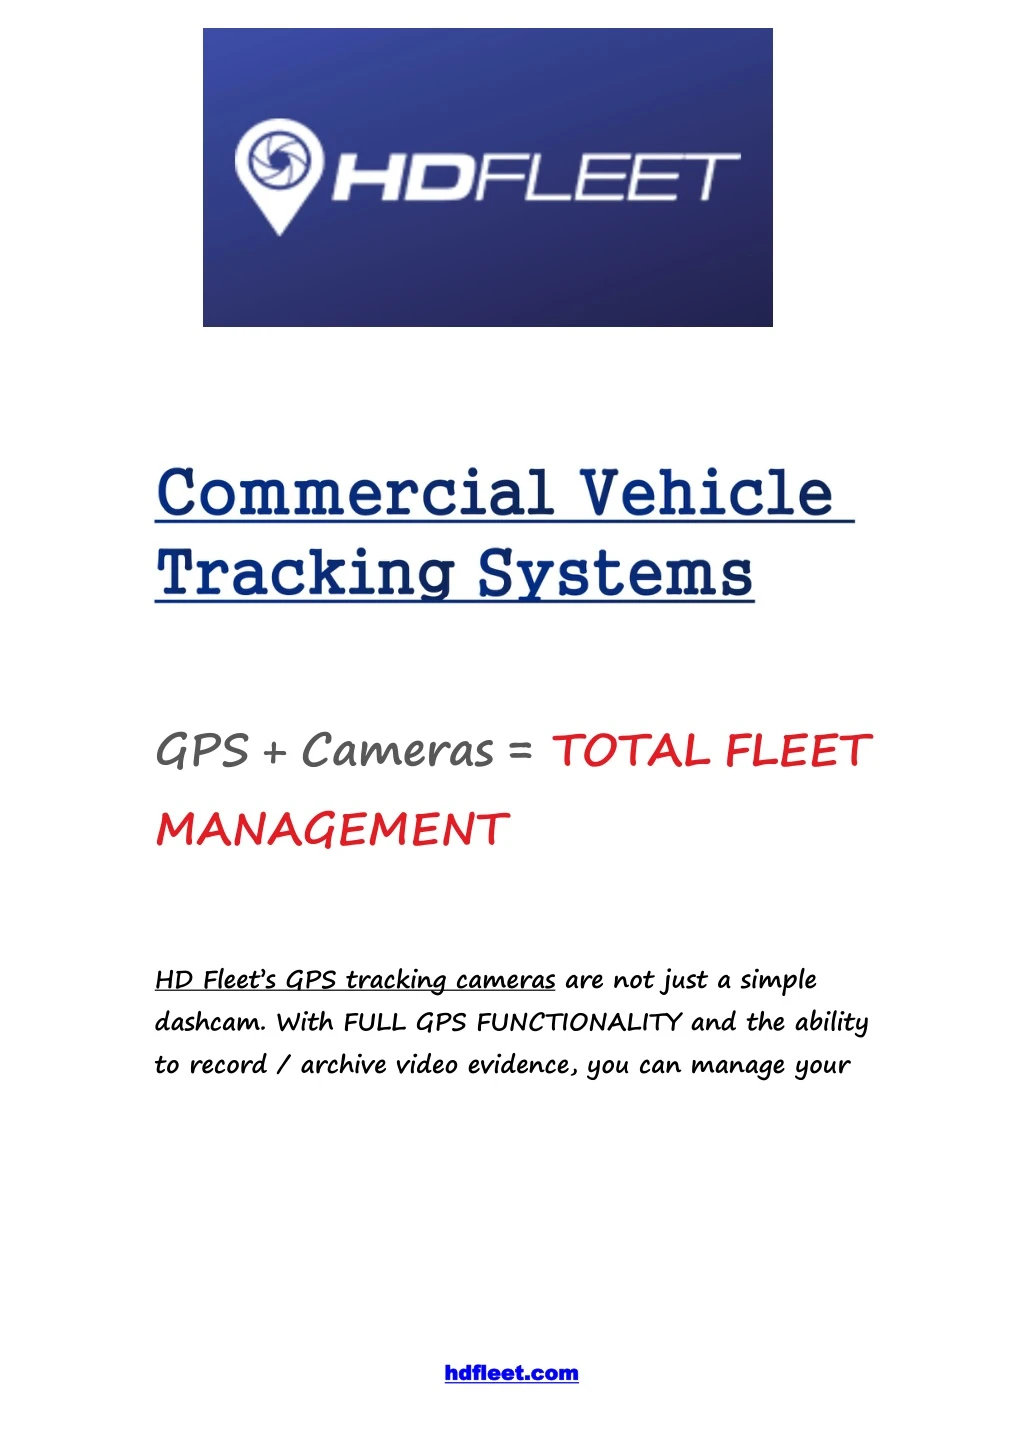 gps cameras total fleet management